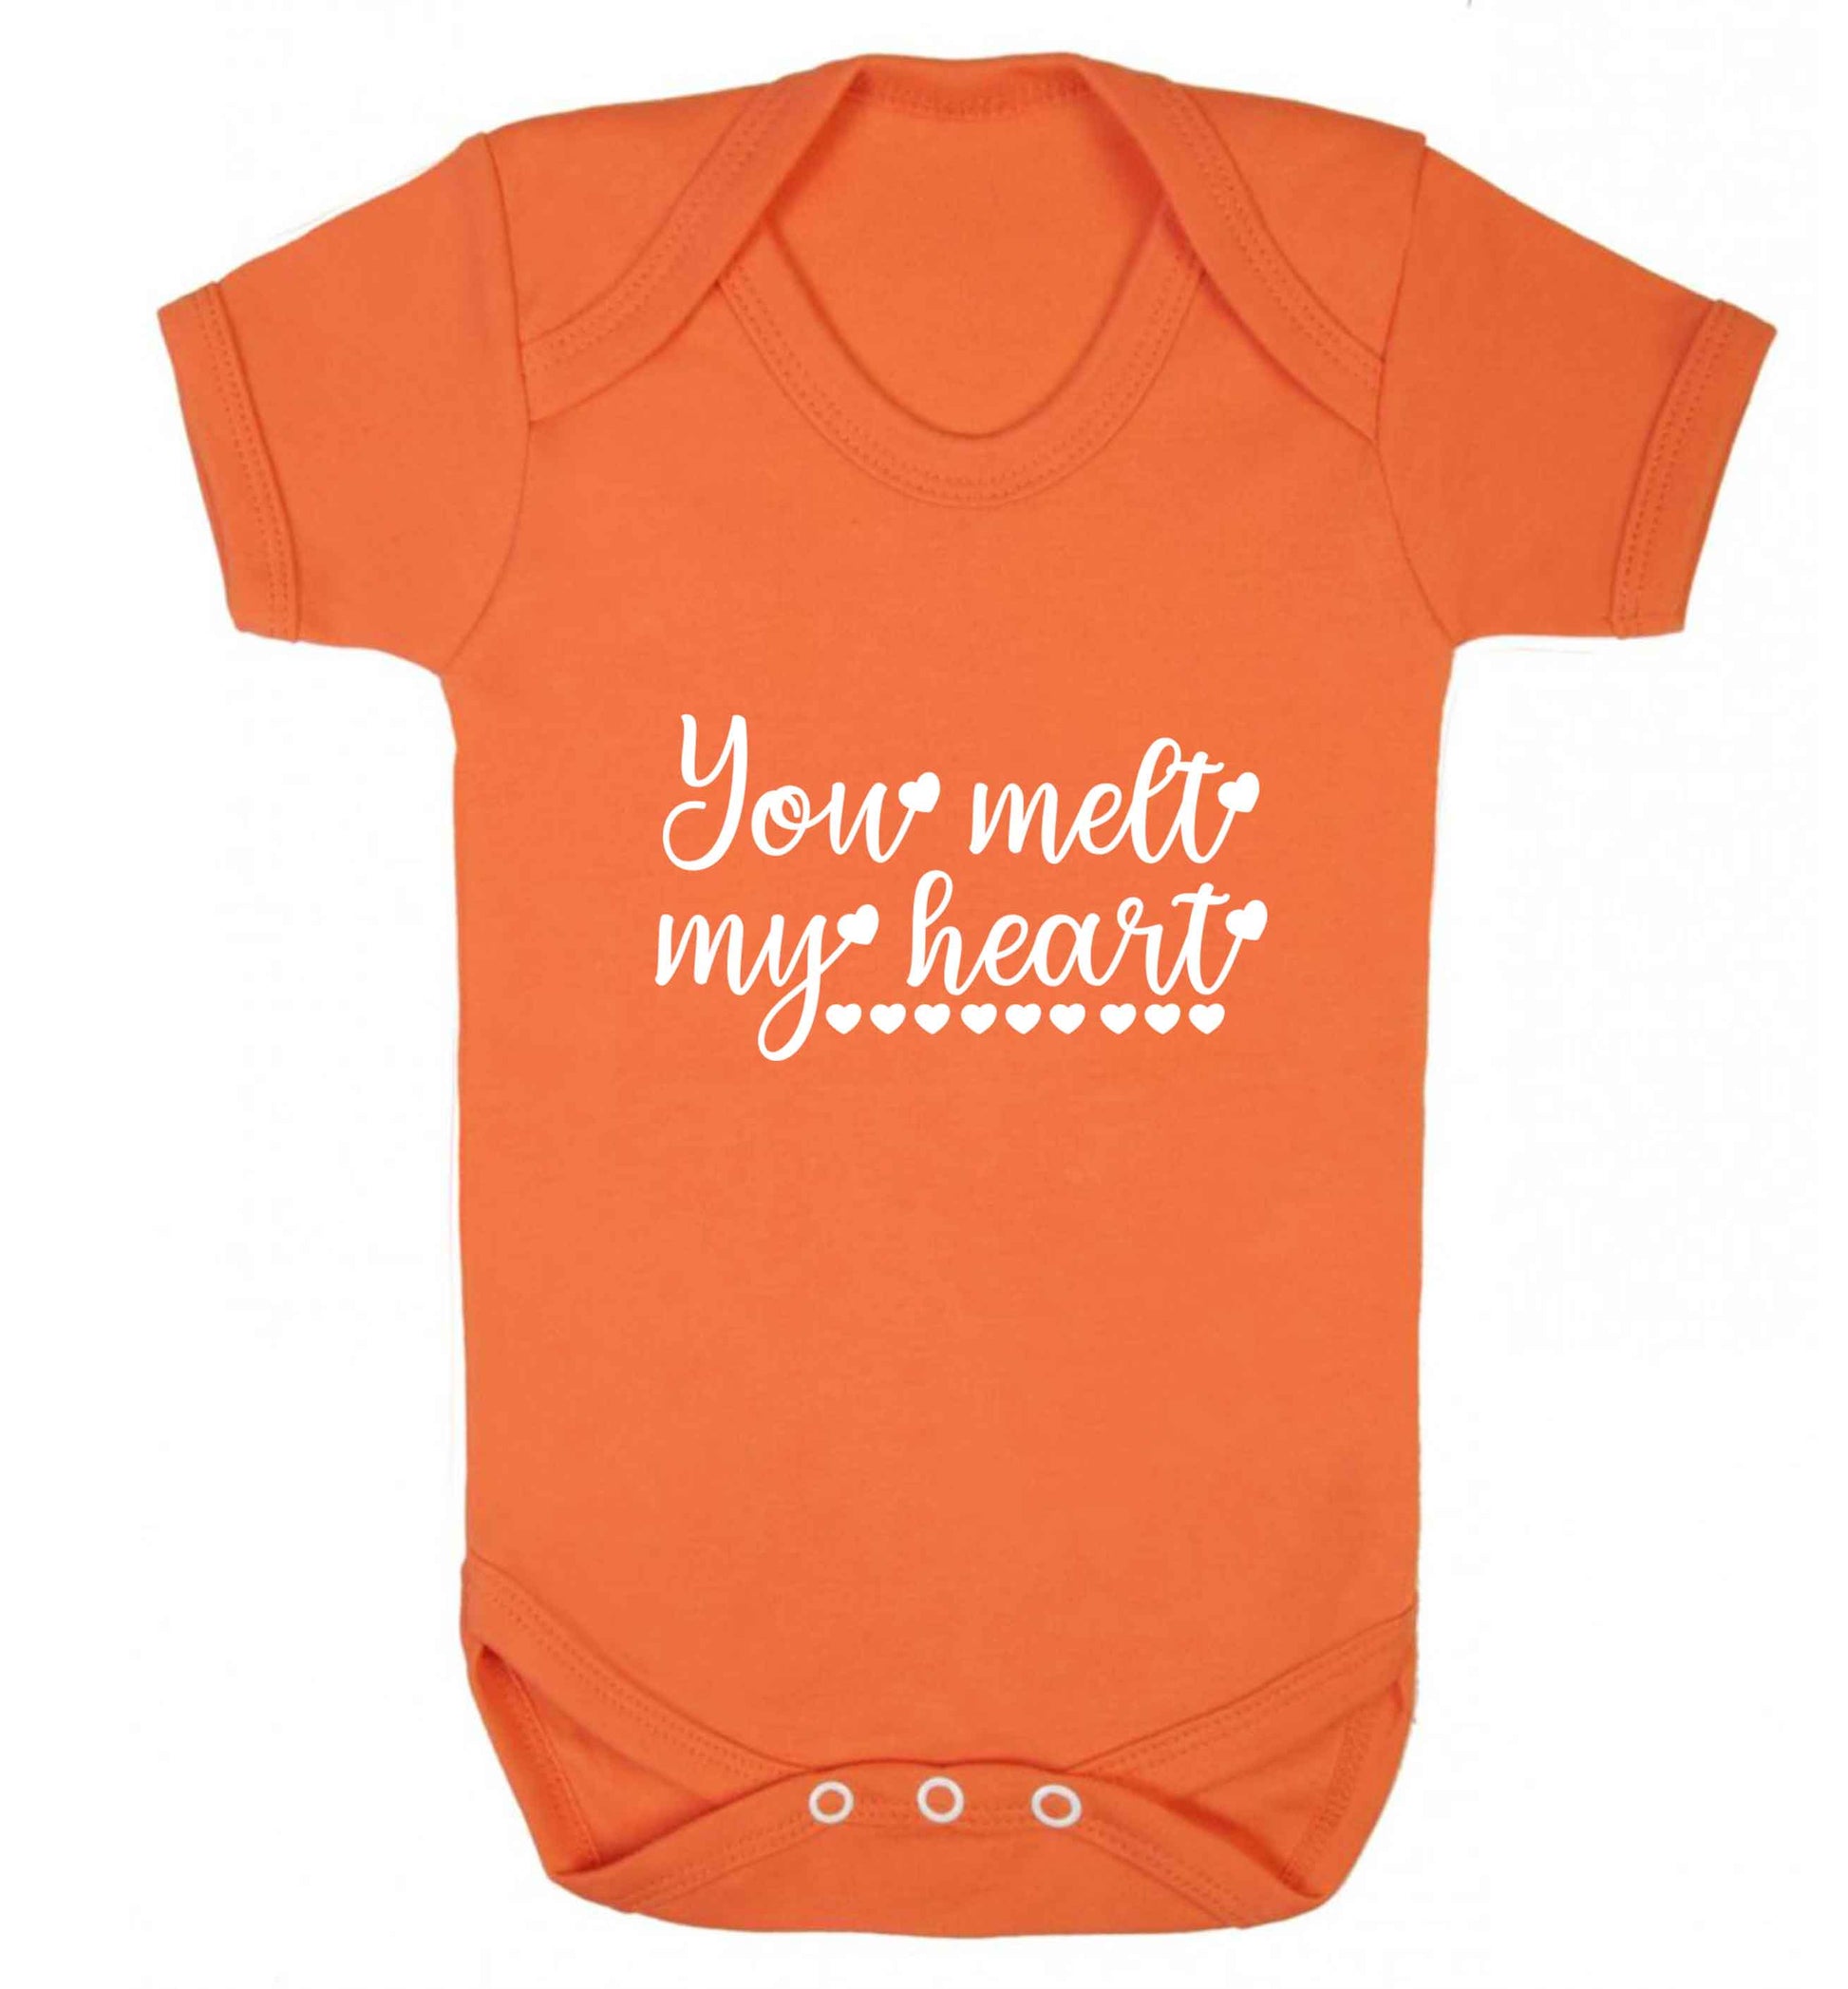 You melt my heart baby vest orange 18-24 months